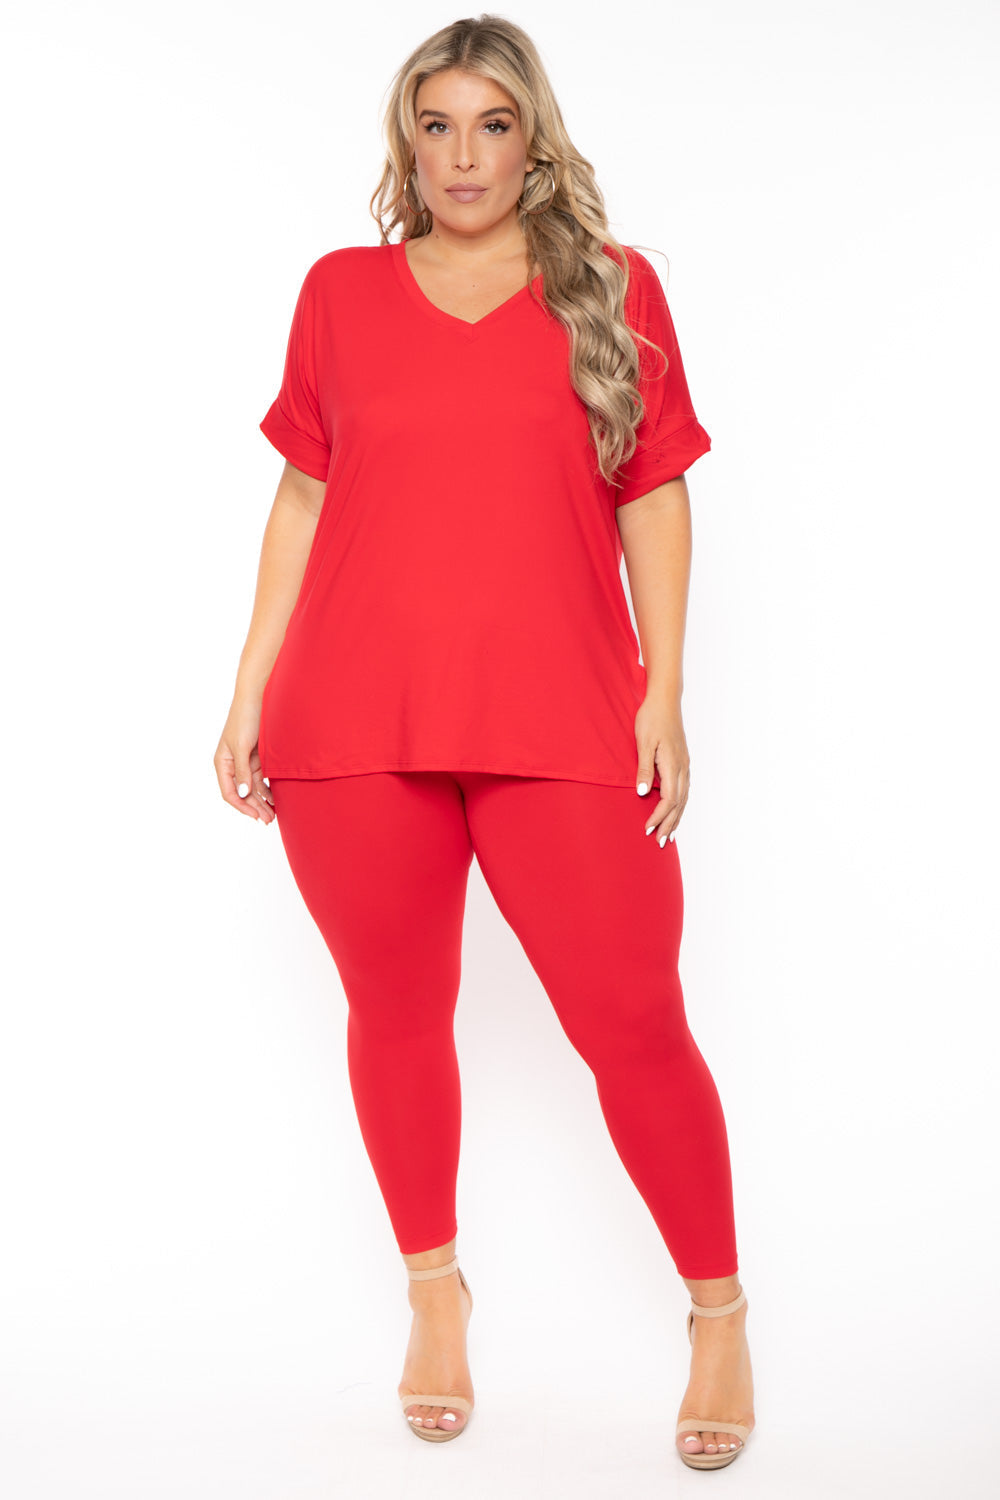 ZENANA Matching Sets 1X / Red Plus Size Lexa Tee And Legging Pant Set - Red